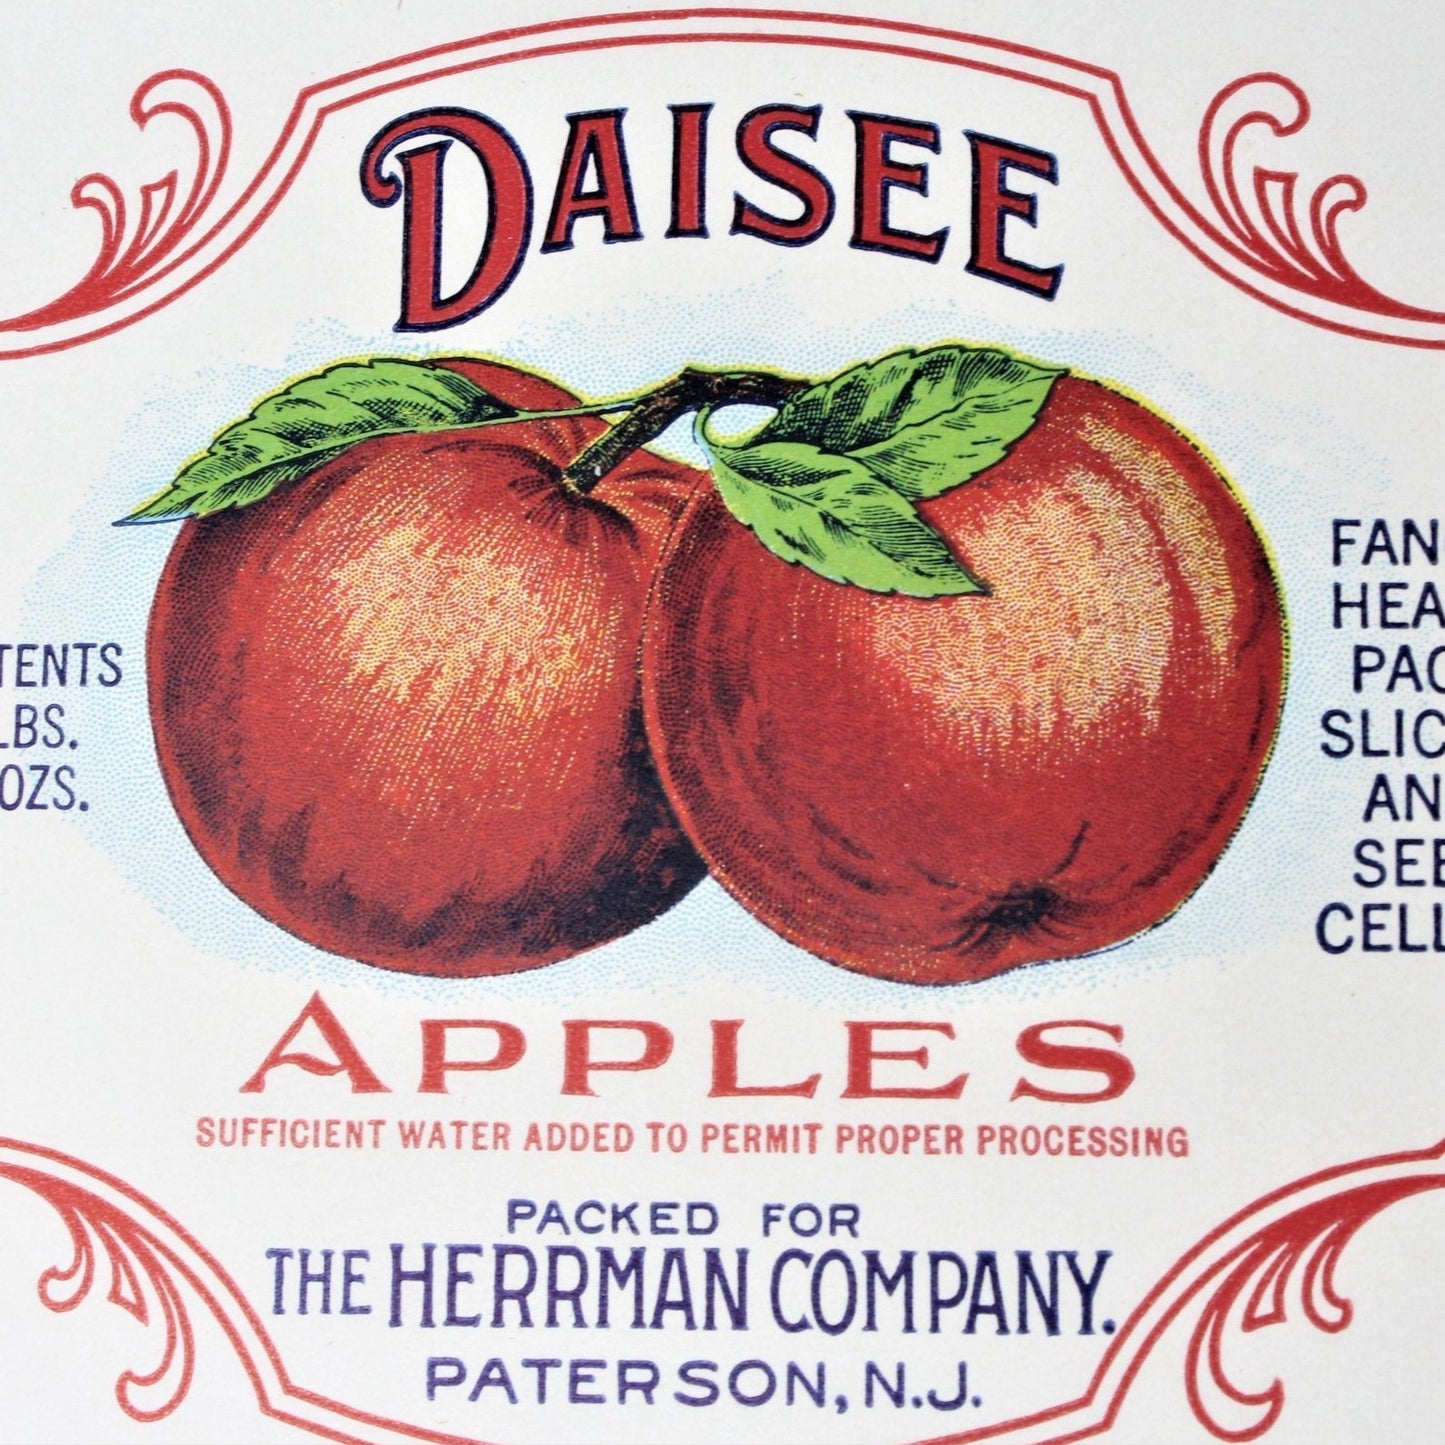 Can Label, Daisee Apples,  Original Lithograph, Rare, NOS, Antique